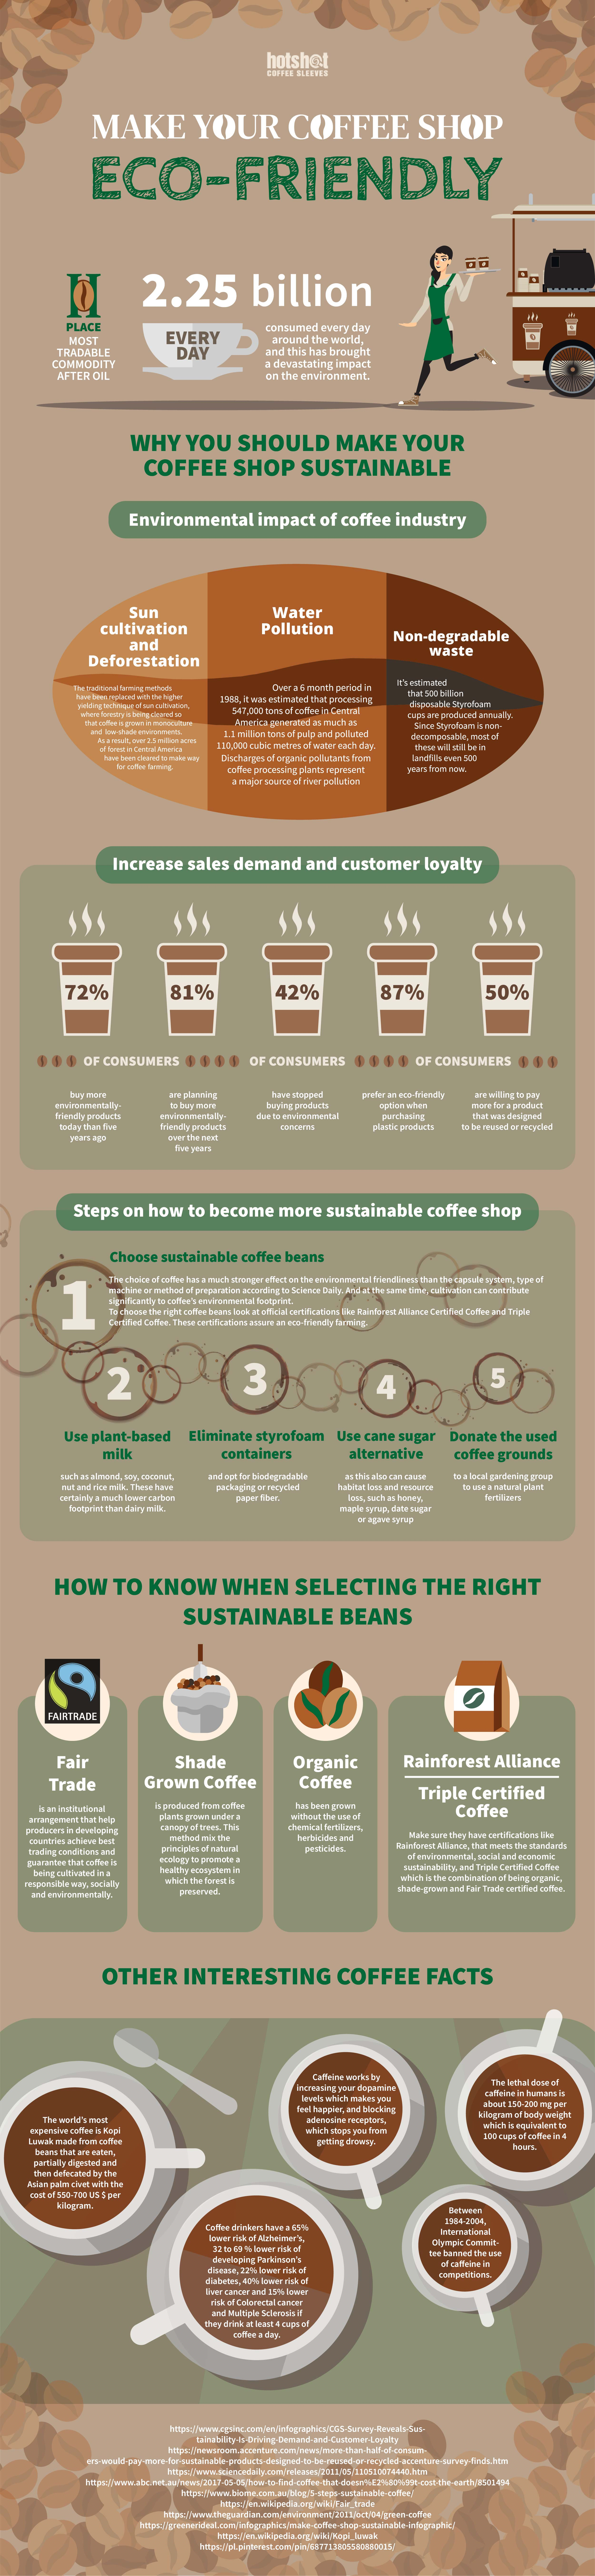  eco-friendly coffee shop